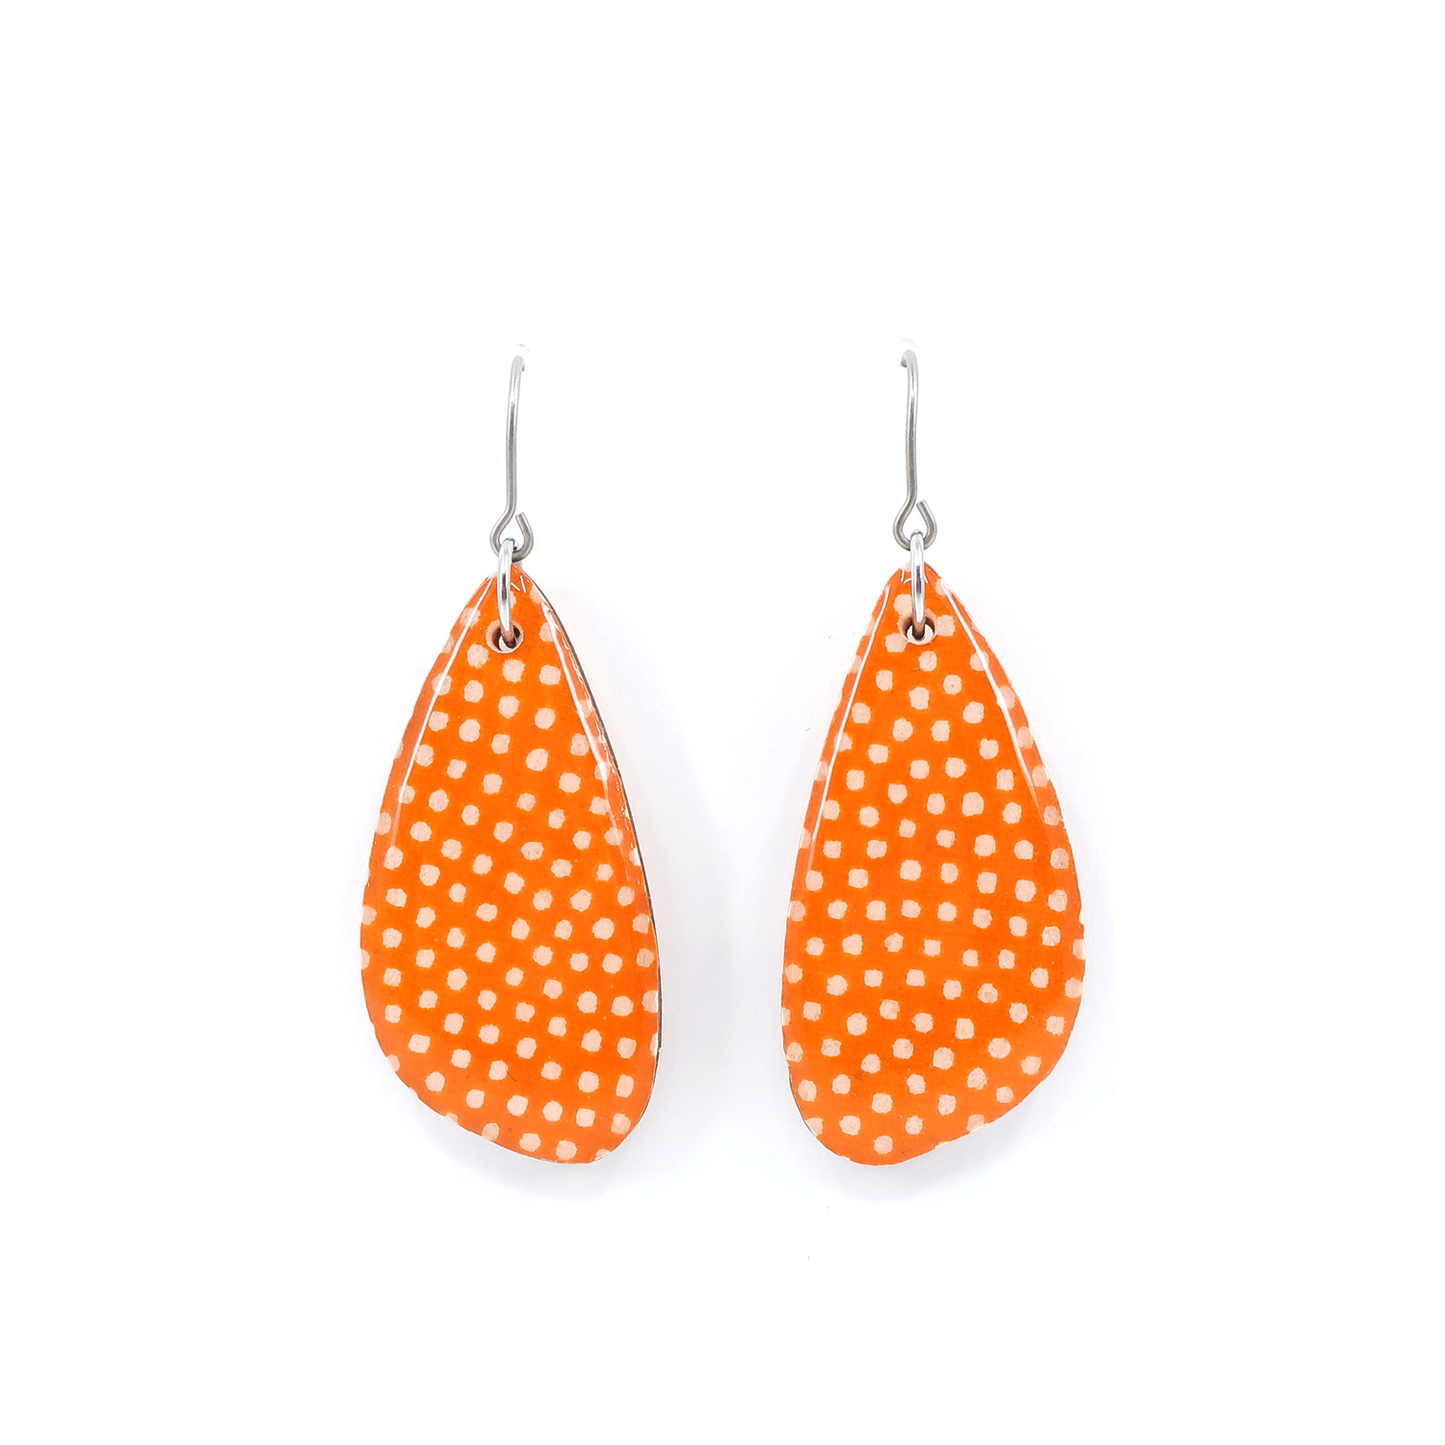 Polka dot Japanese Chiyogami wooden earrings - Orange